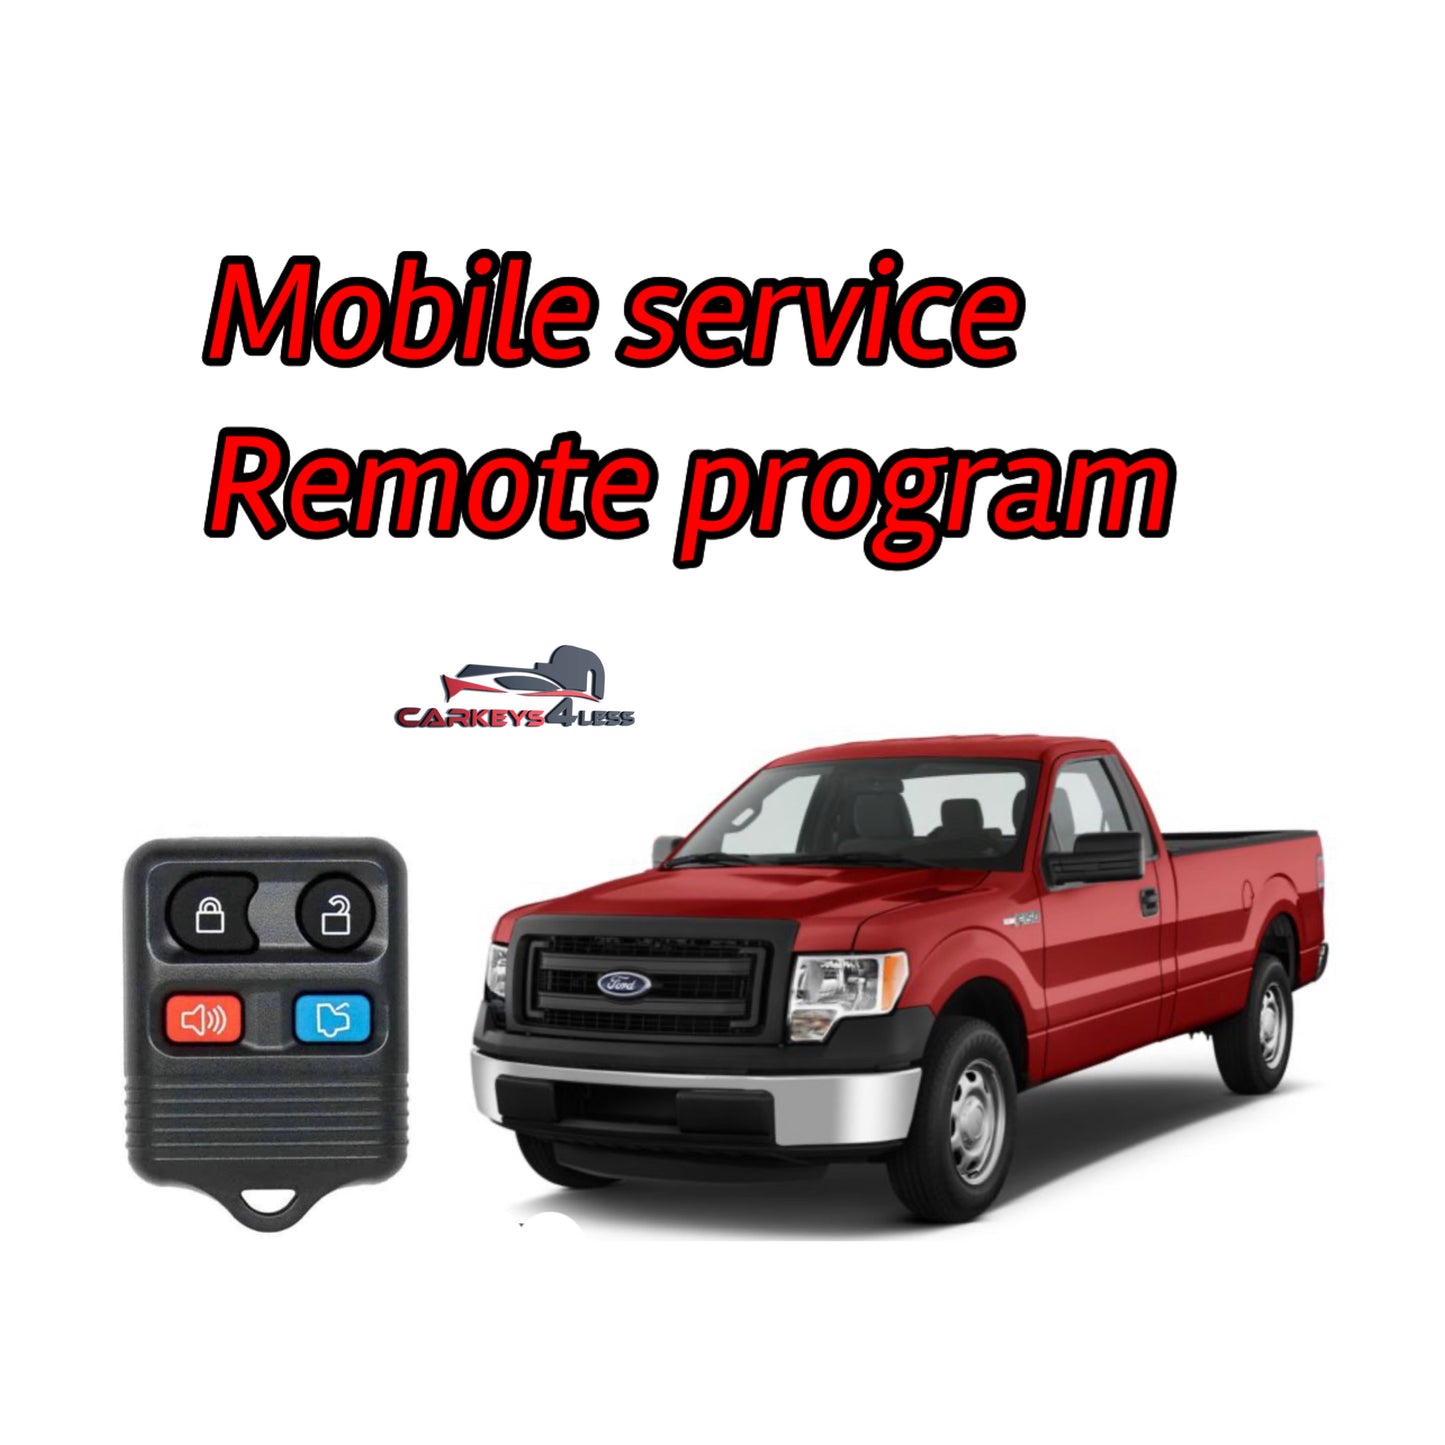 Mobile service for an aftermarket ford remote program